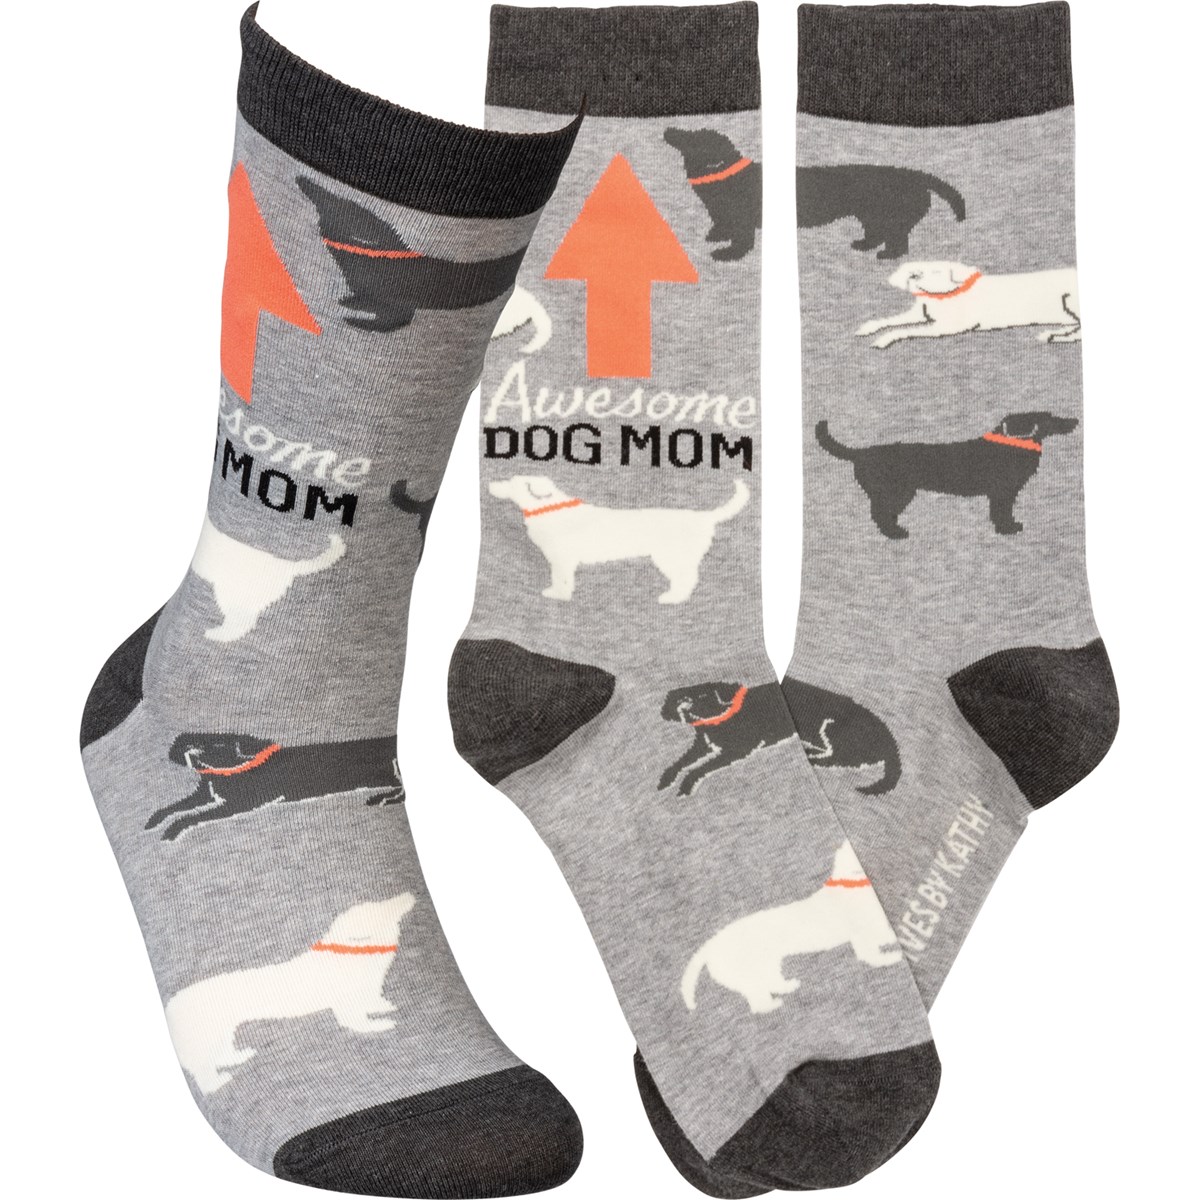 Awesome Dog Mom Socks - Cotton, Nylon, Spandex